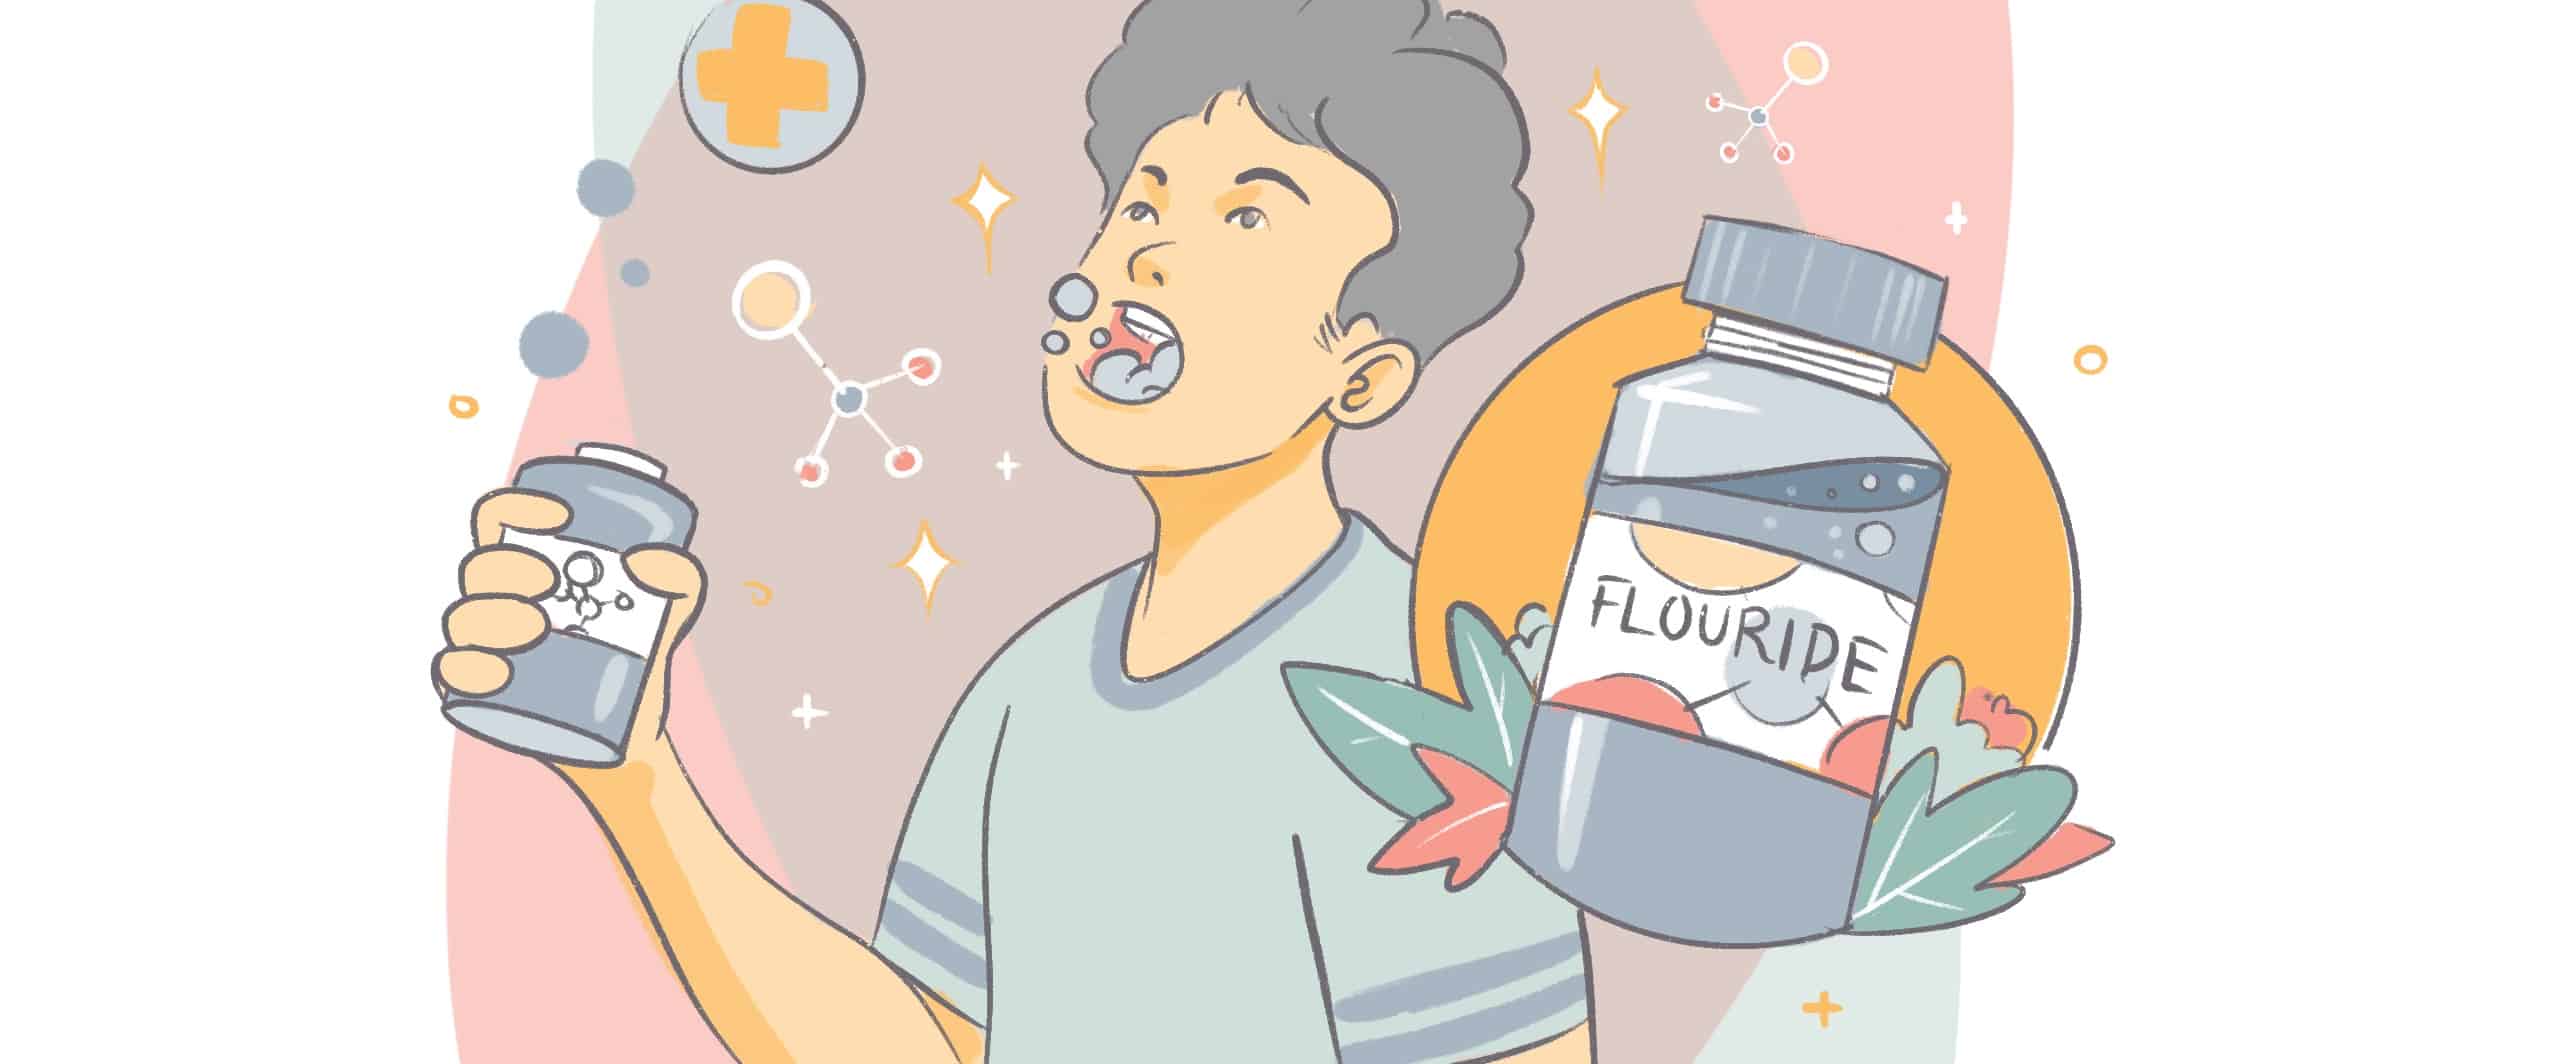 Fluoride treatment